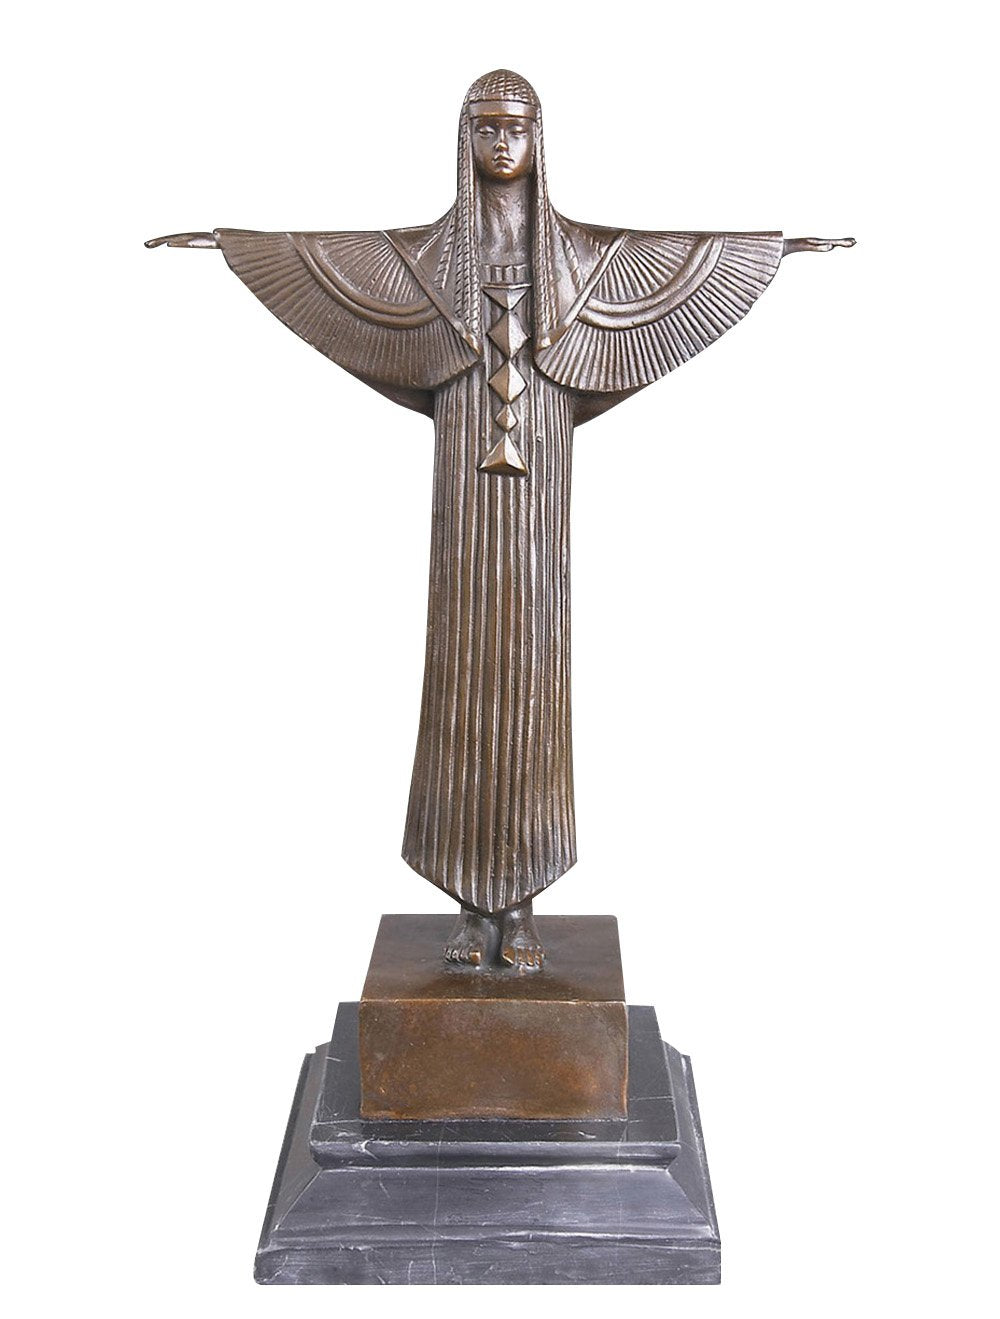 TPY-105 bronze sculpture